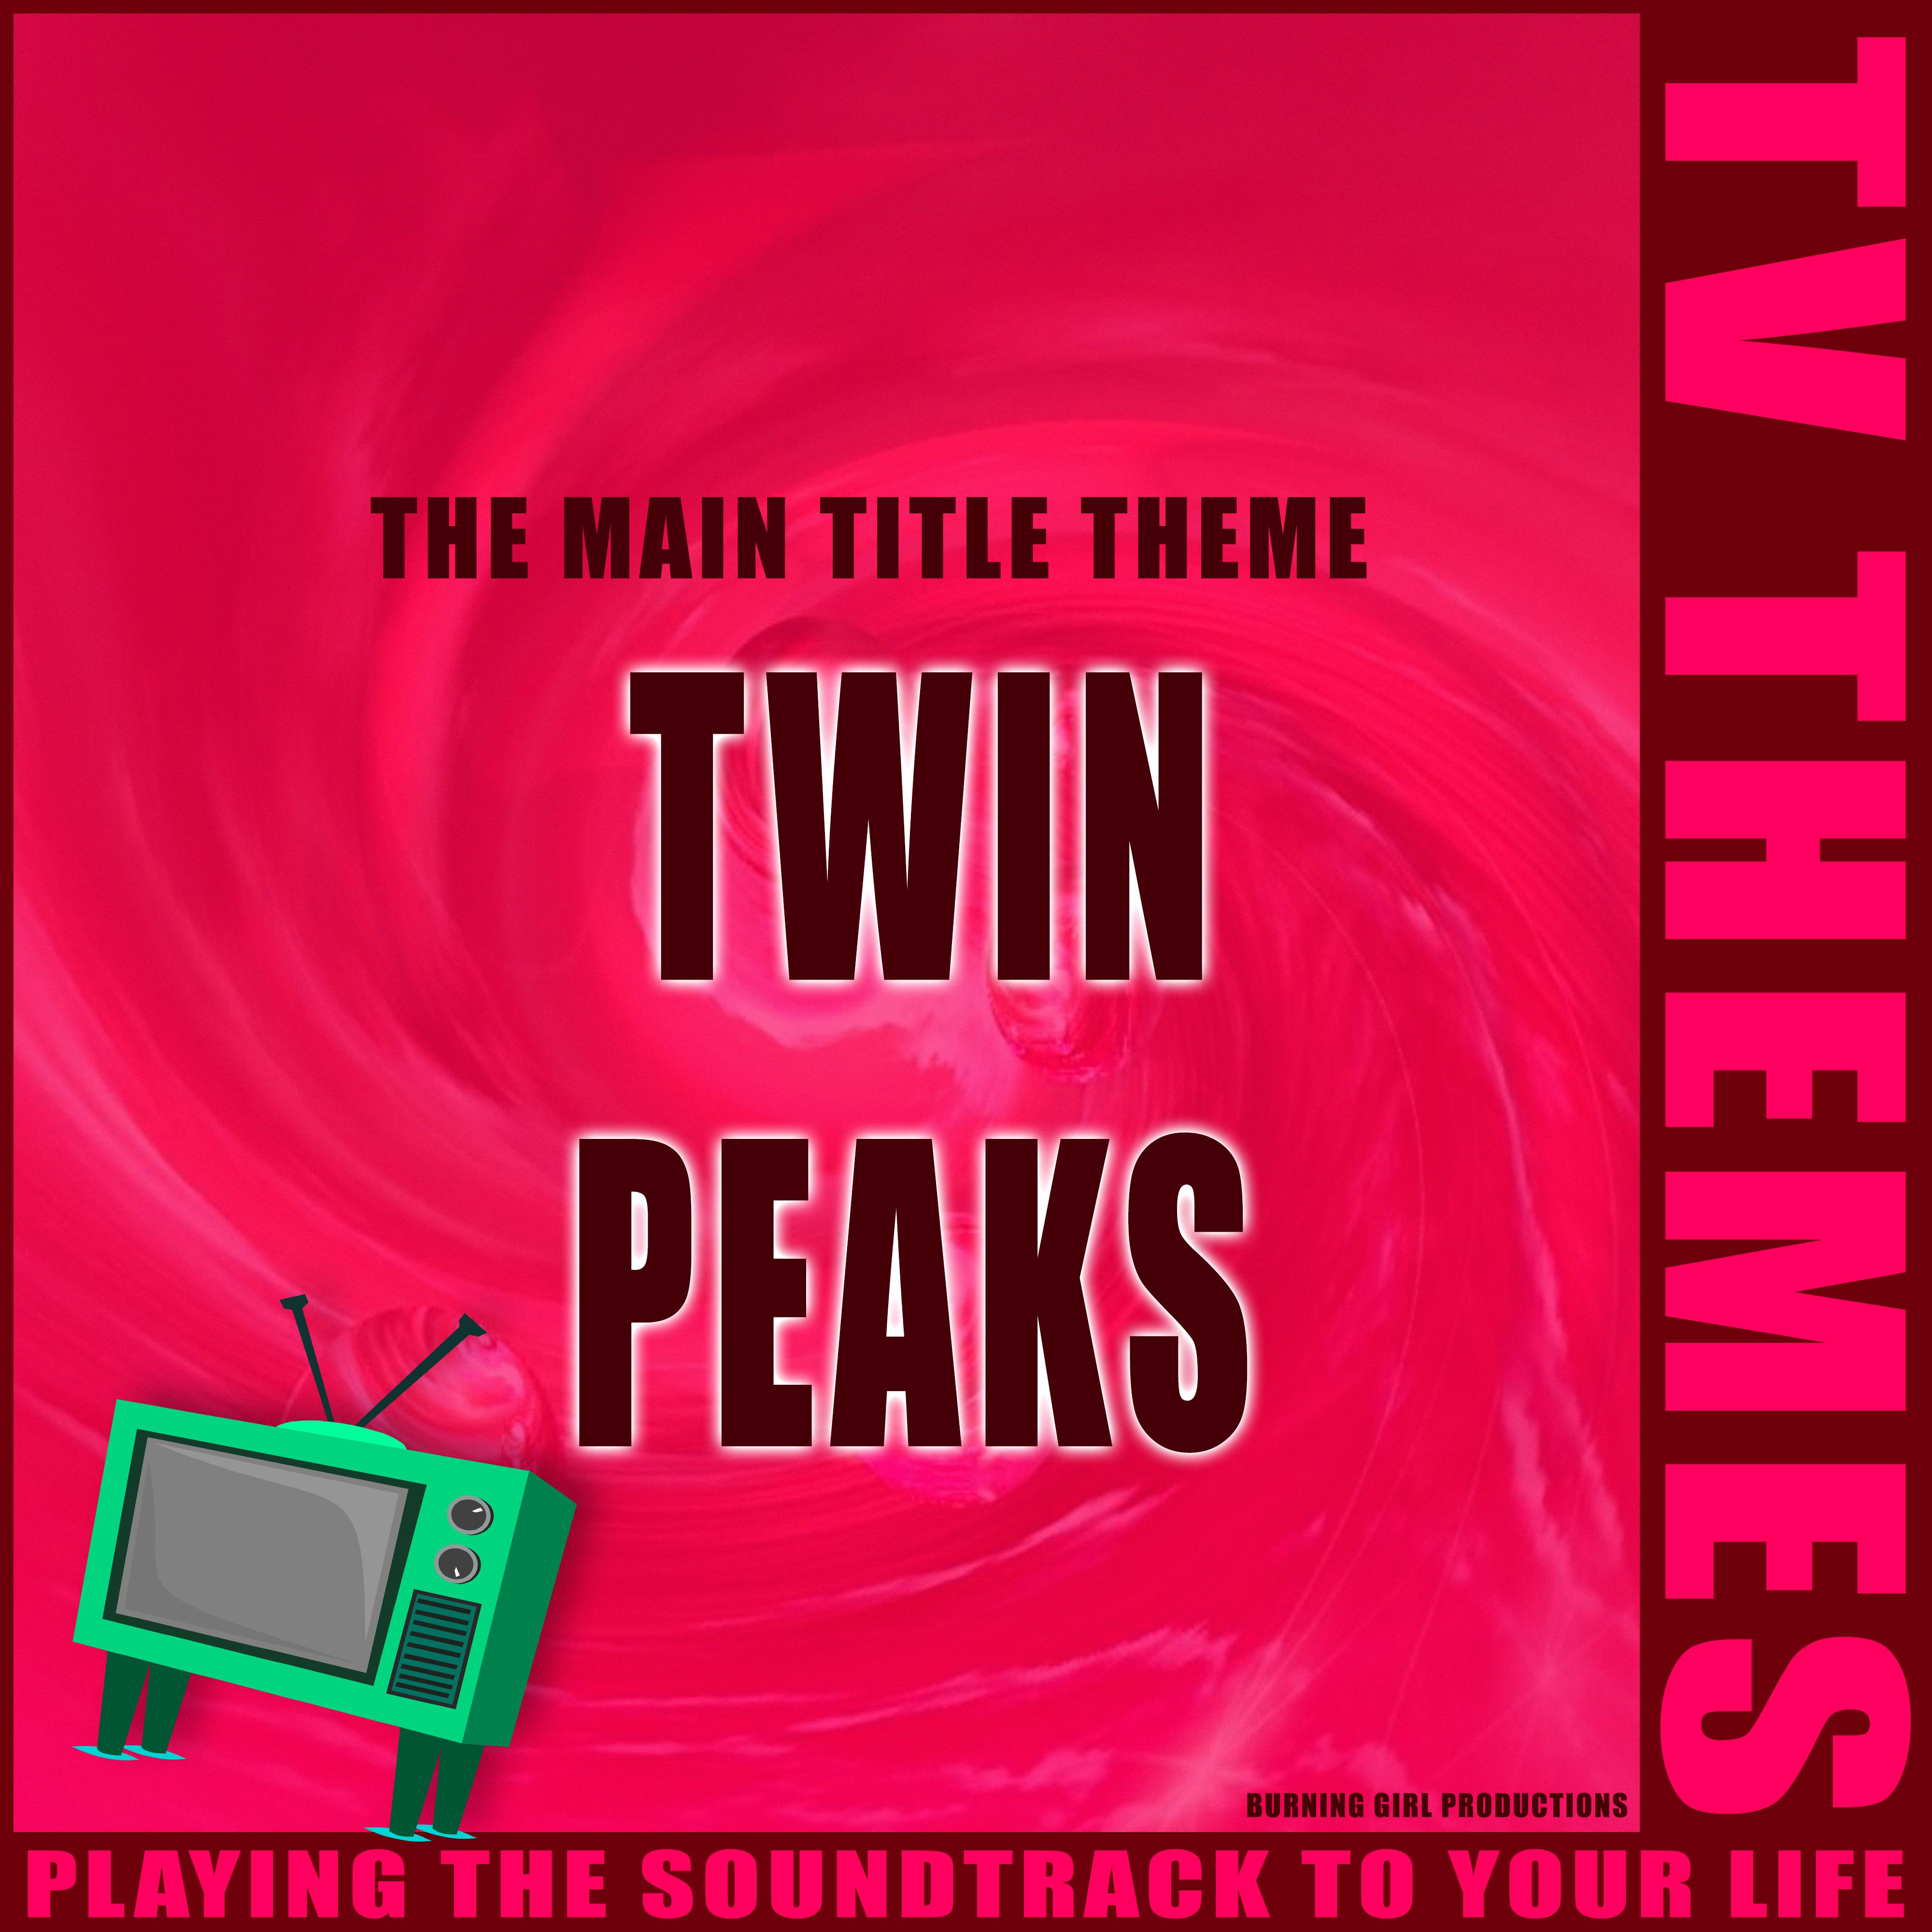 The Main Title Theme - Twin Peaks